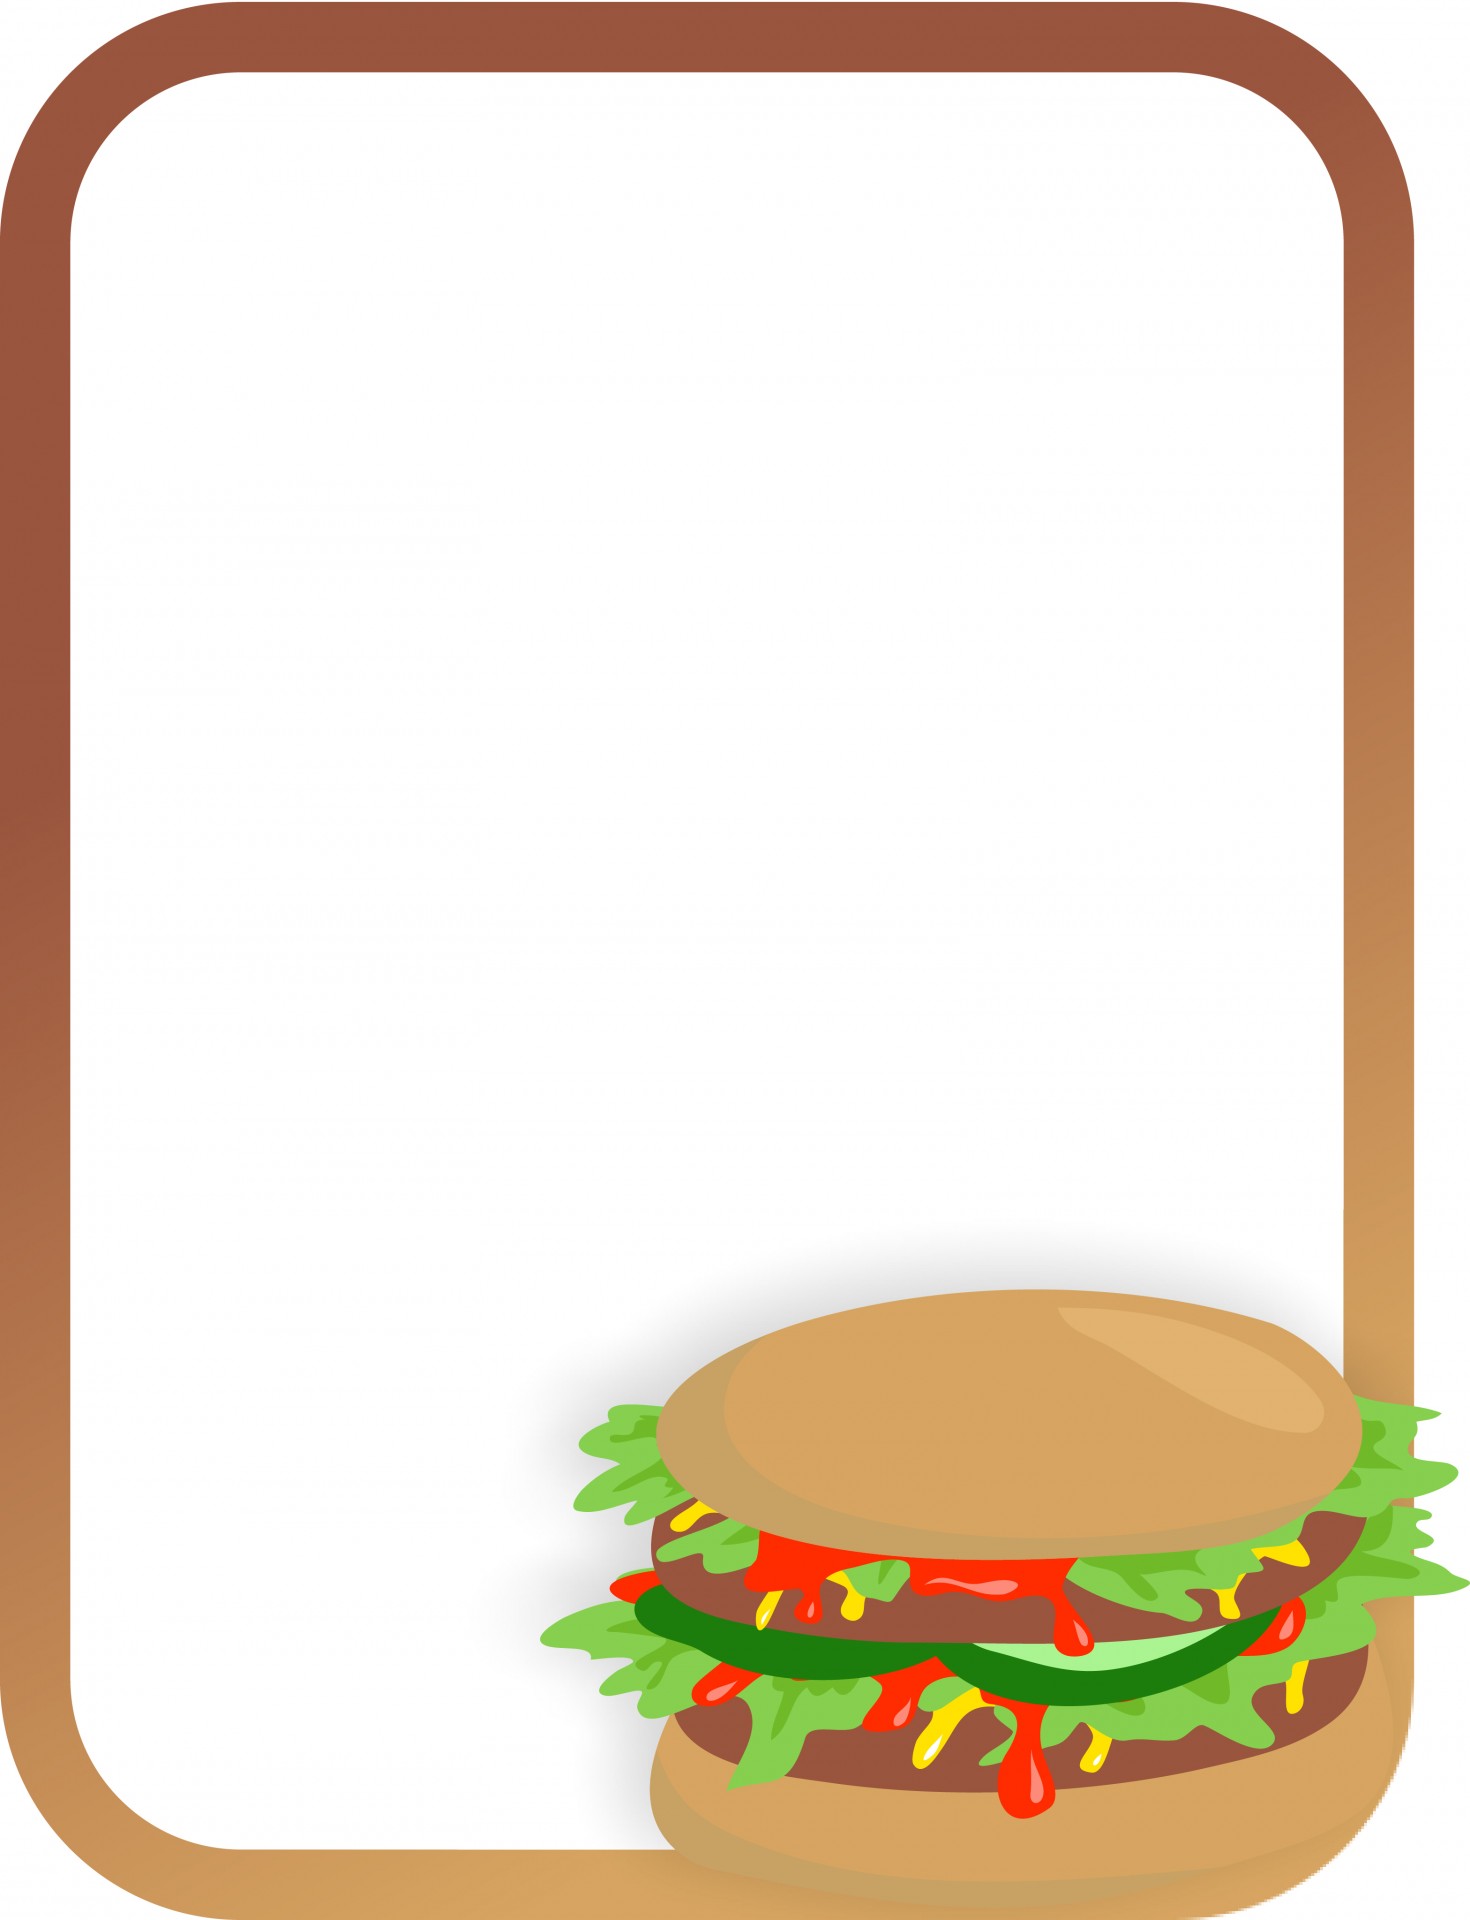 Burger clipart border, Burger border Transparent FREE for